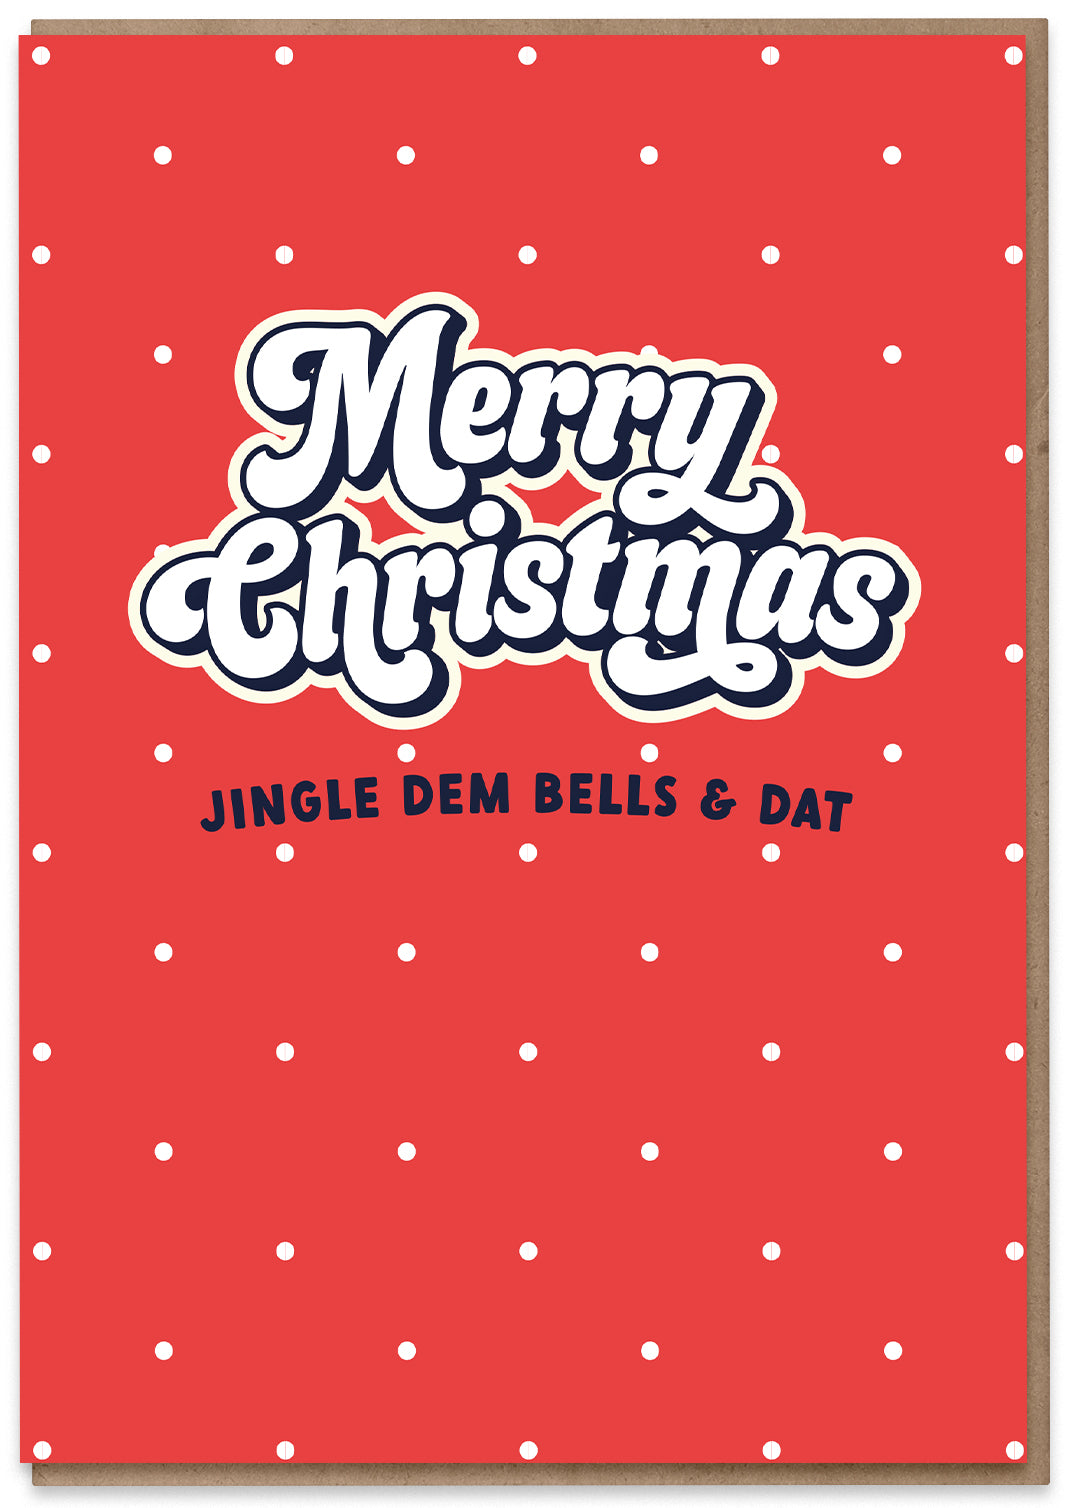 Jingle Dem Bells & Dat